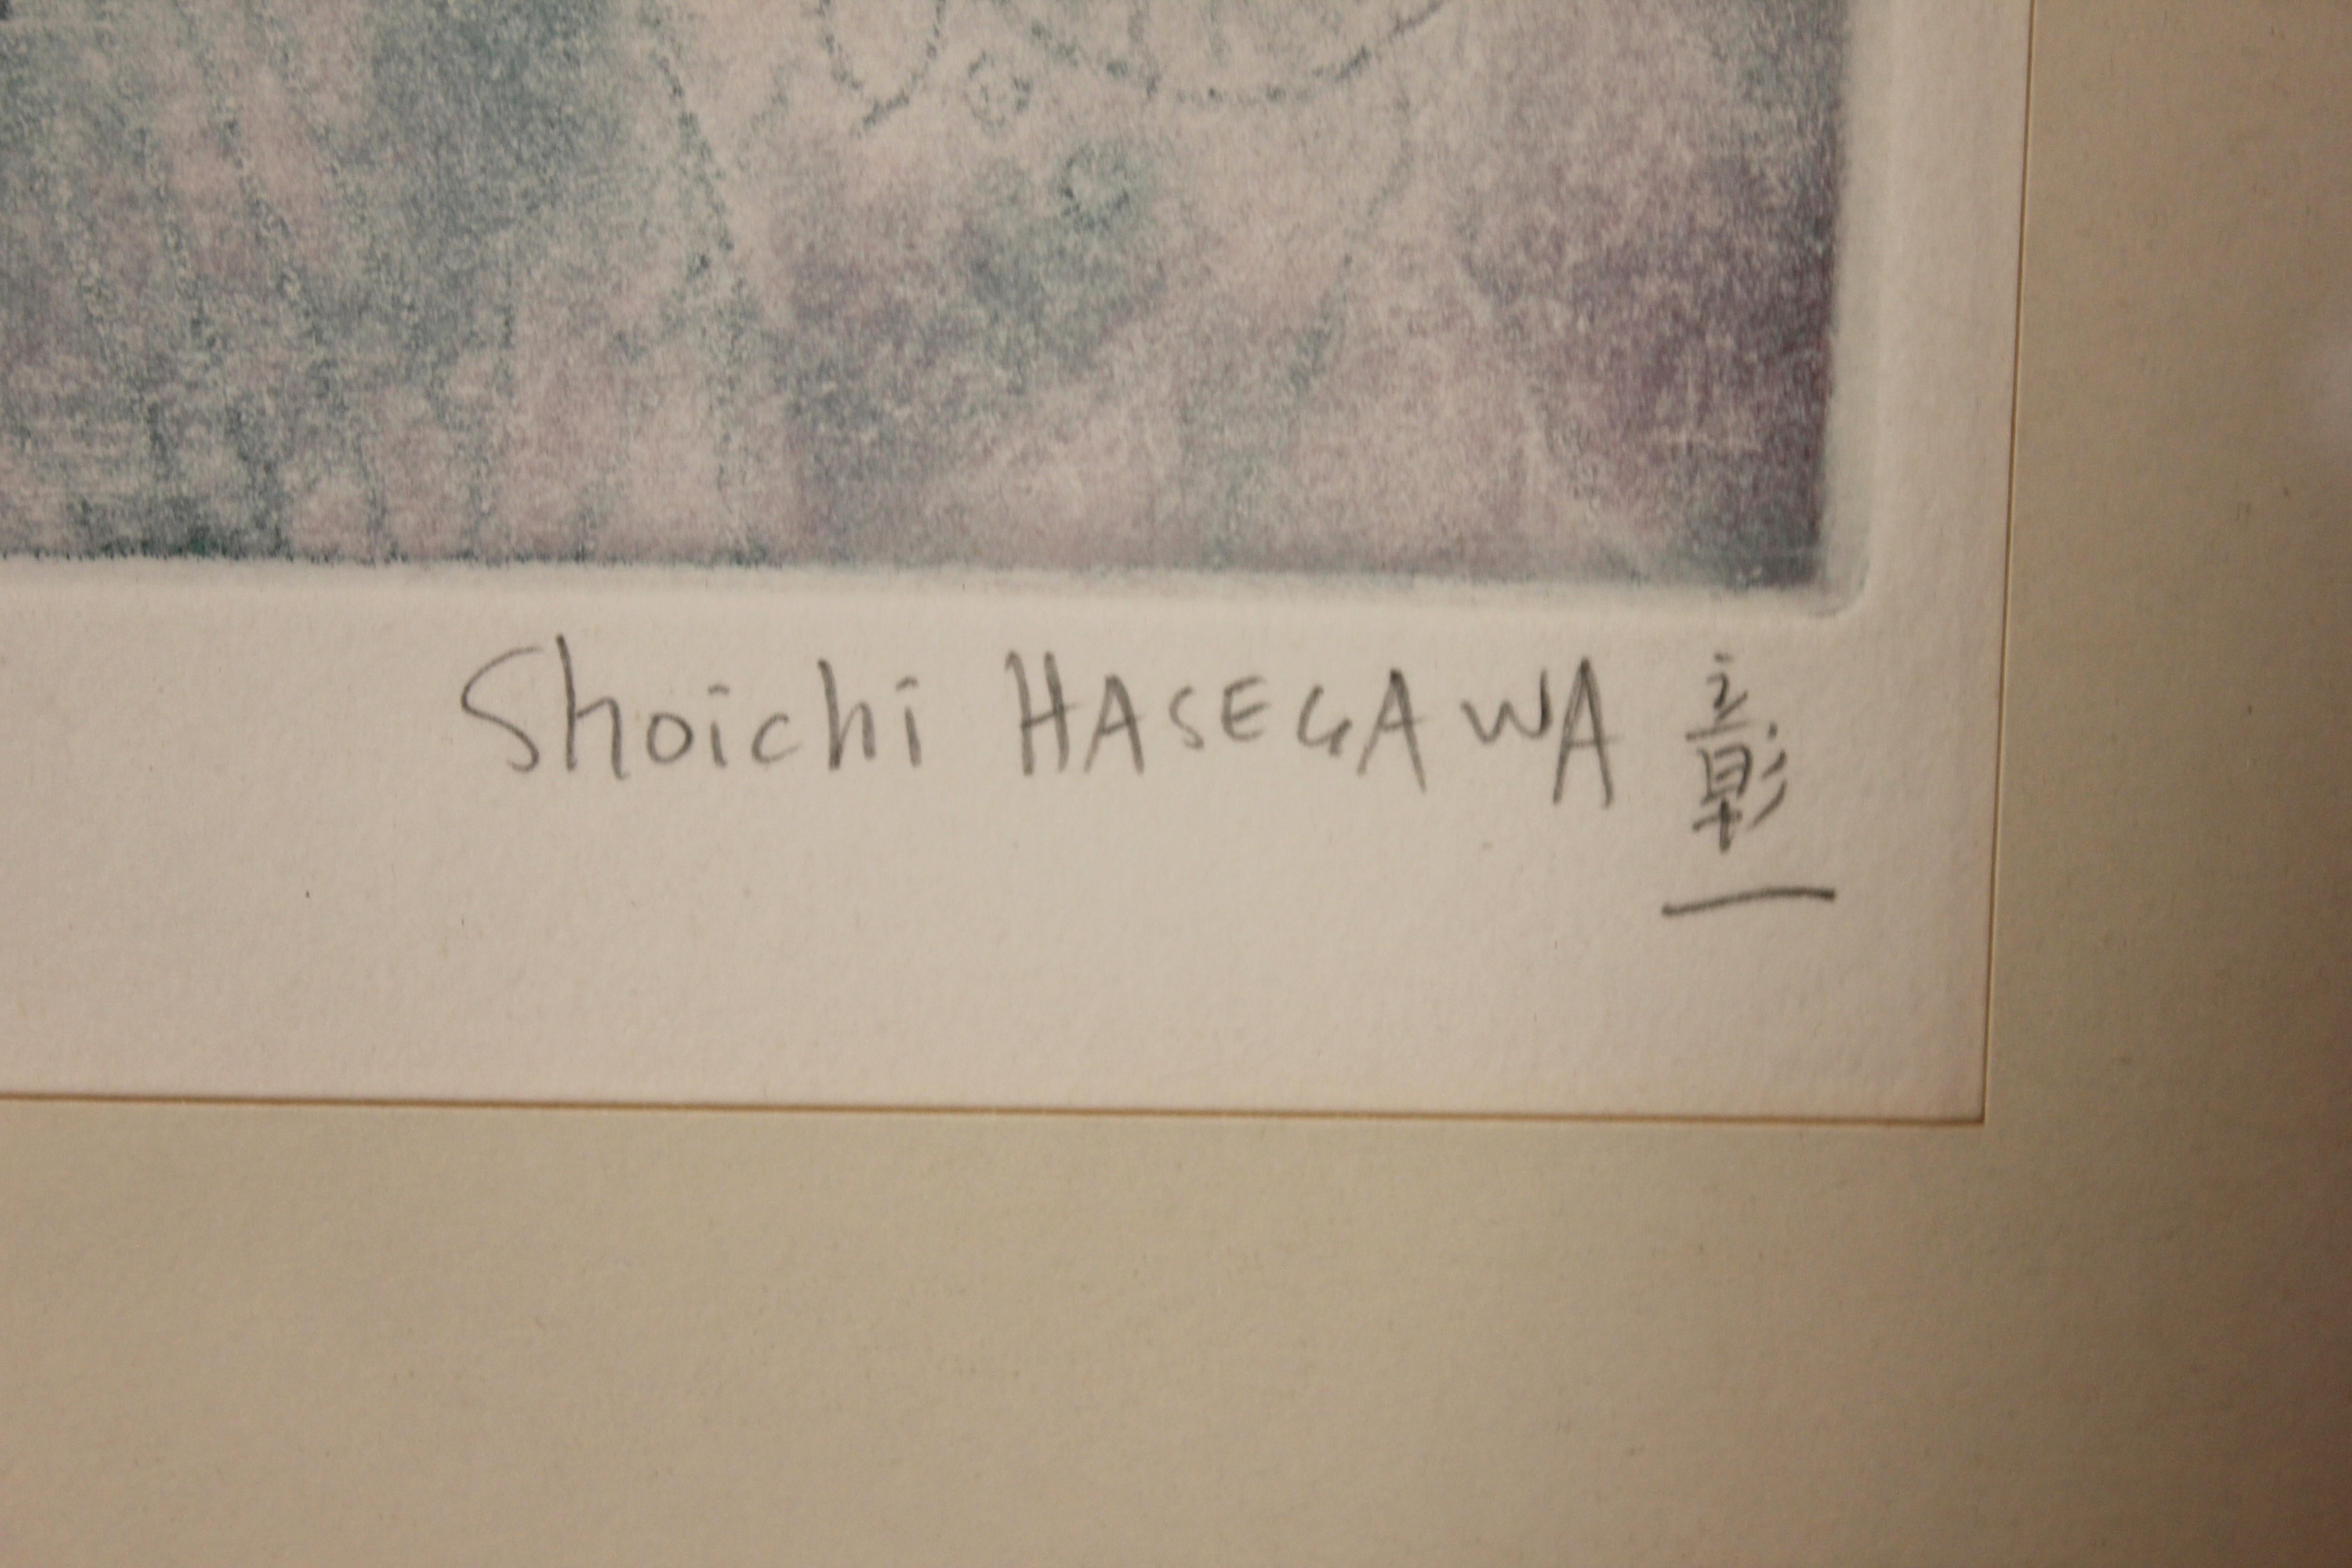 shoichi hasegawa artist